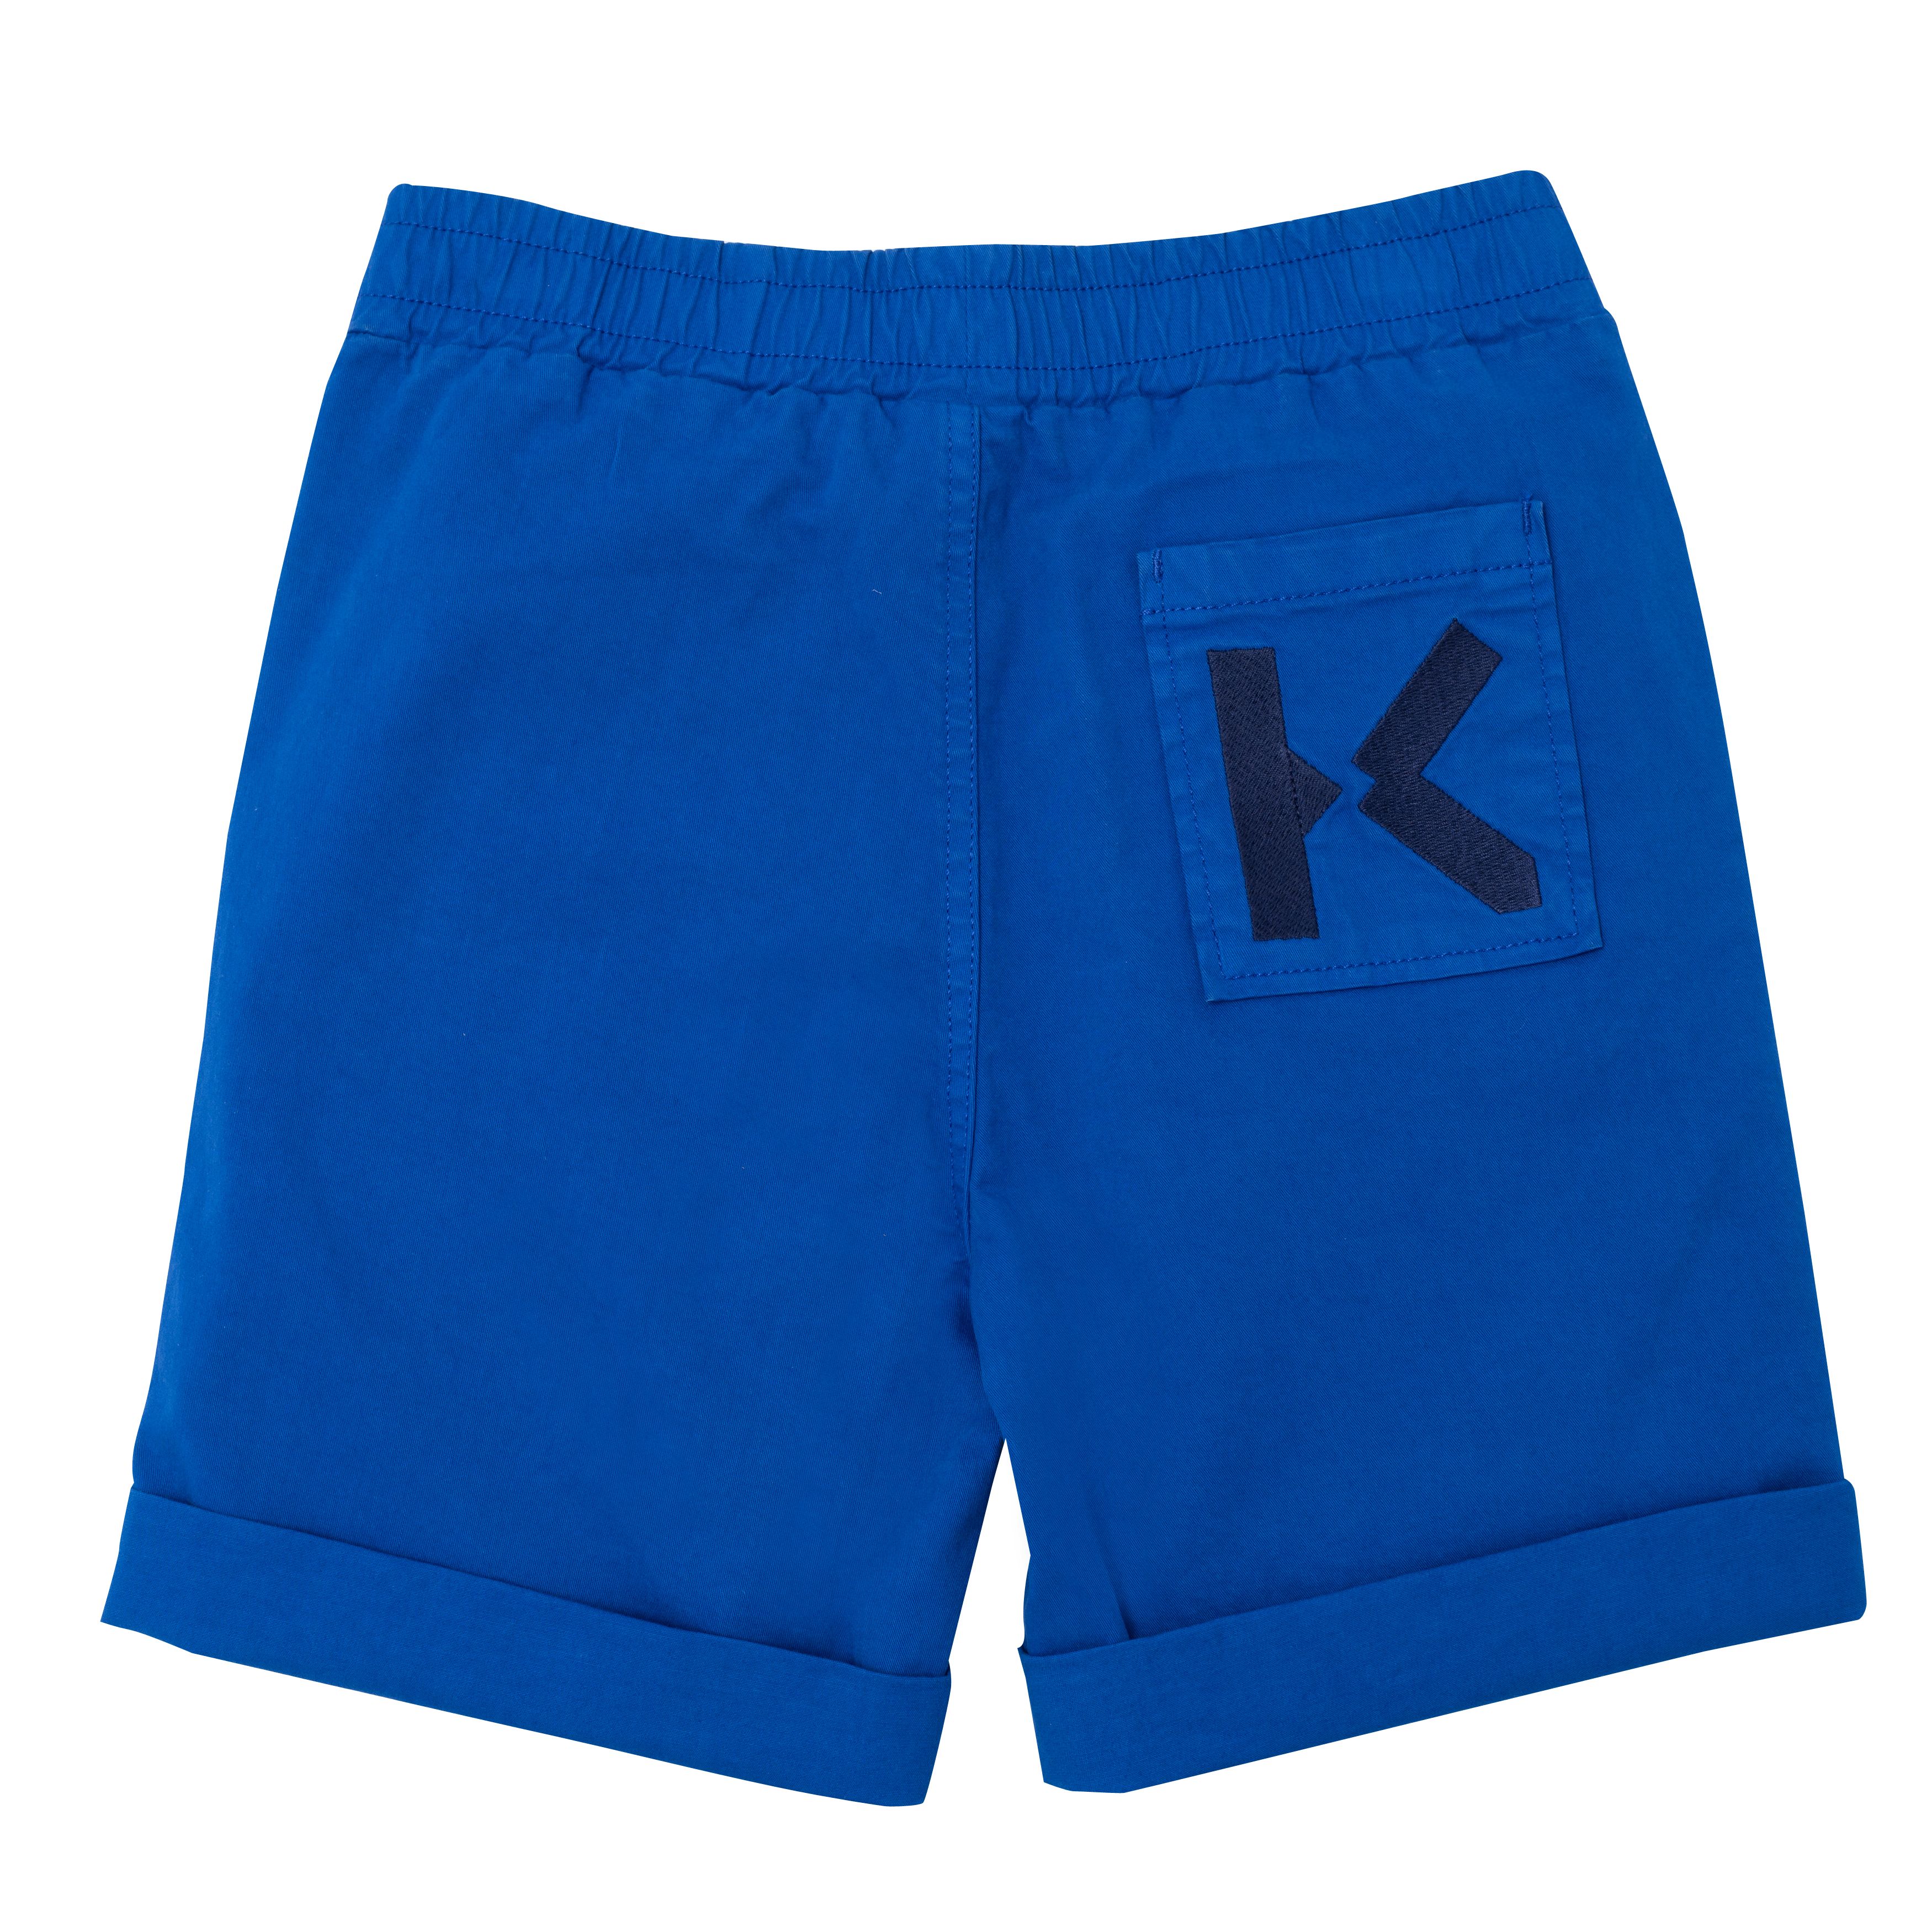 Dyed cotton bermuda shorts KENZO KIDS for BOY